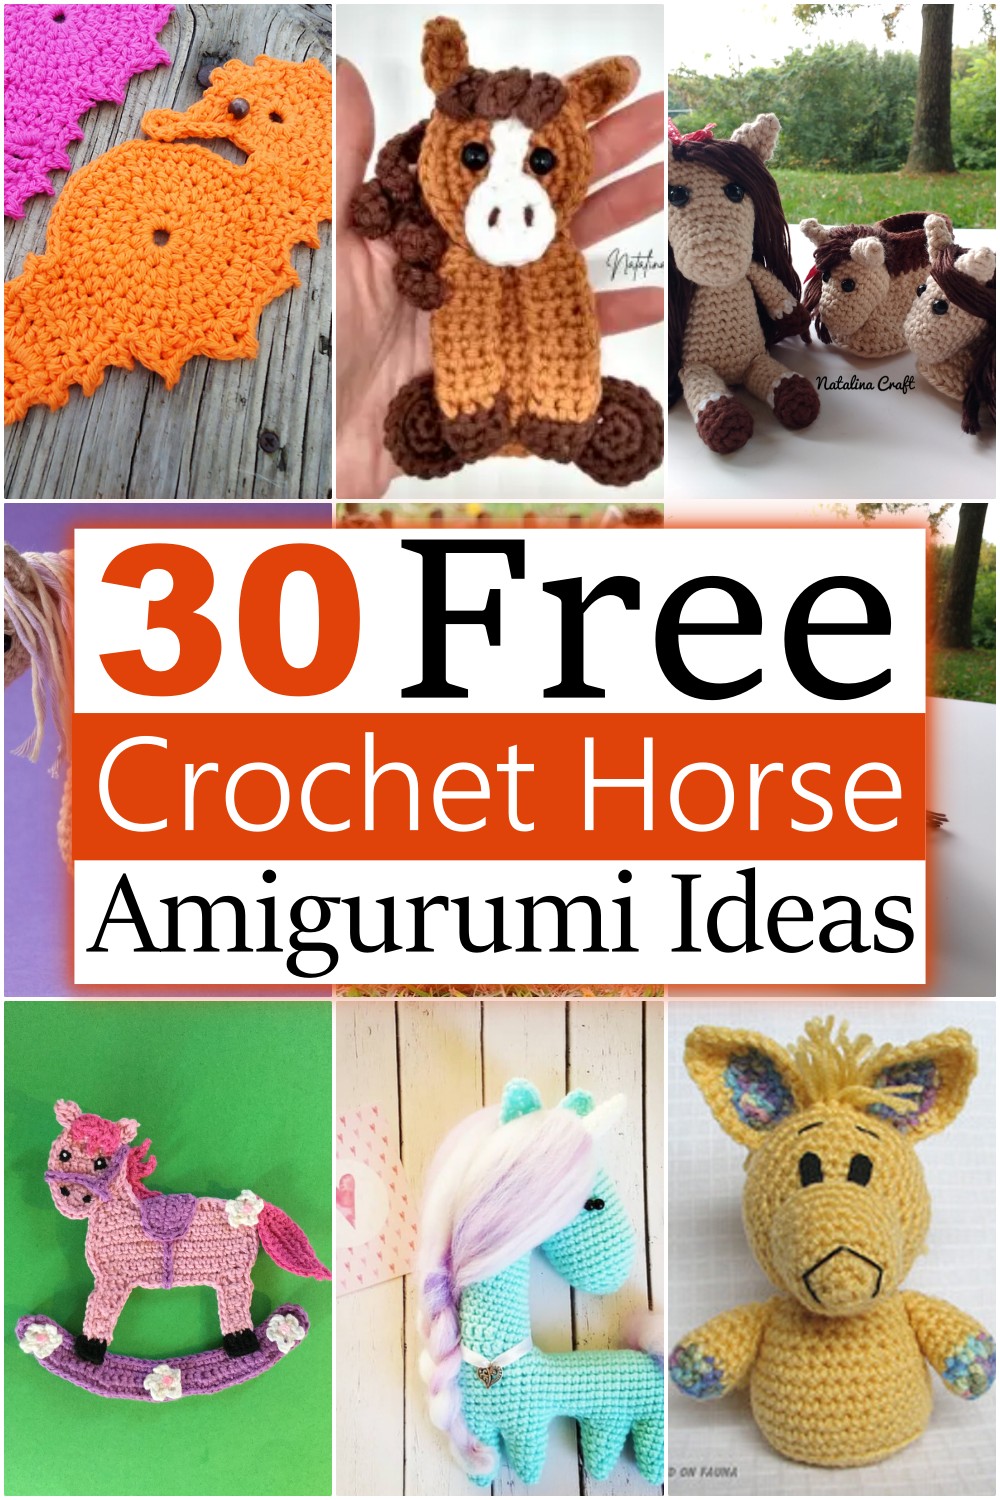 30 Free Crochet Horse Patterns - Amigurumi Ideas